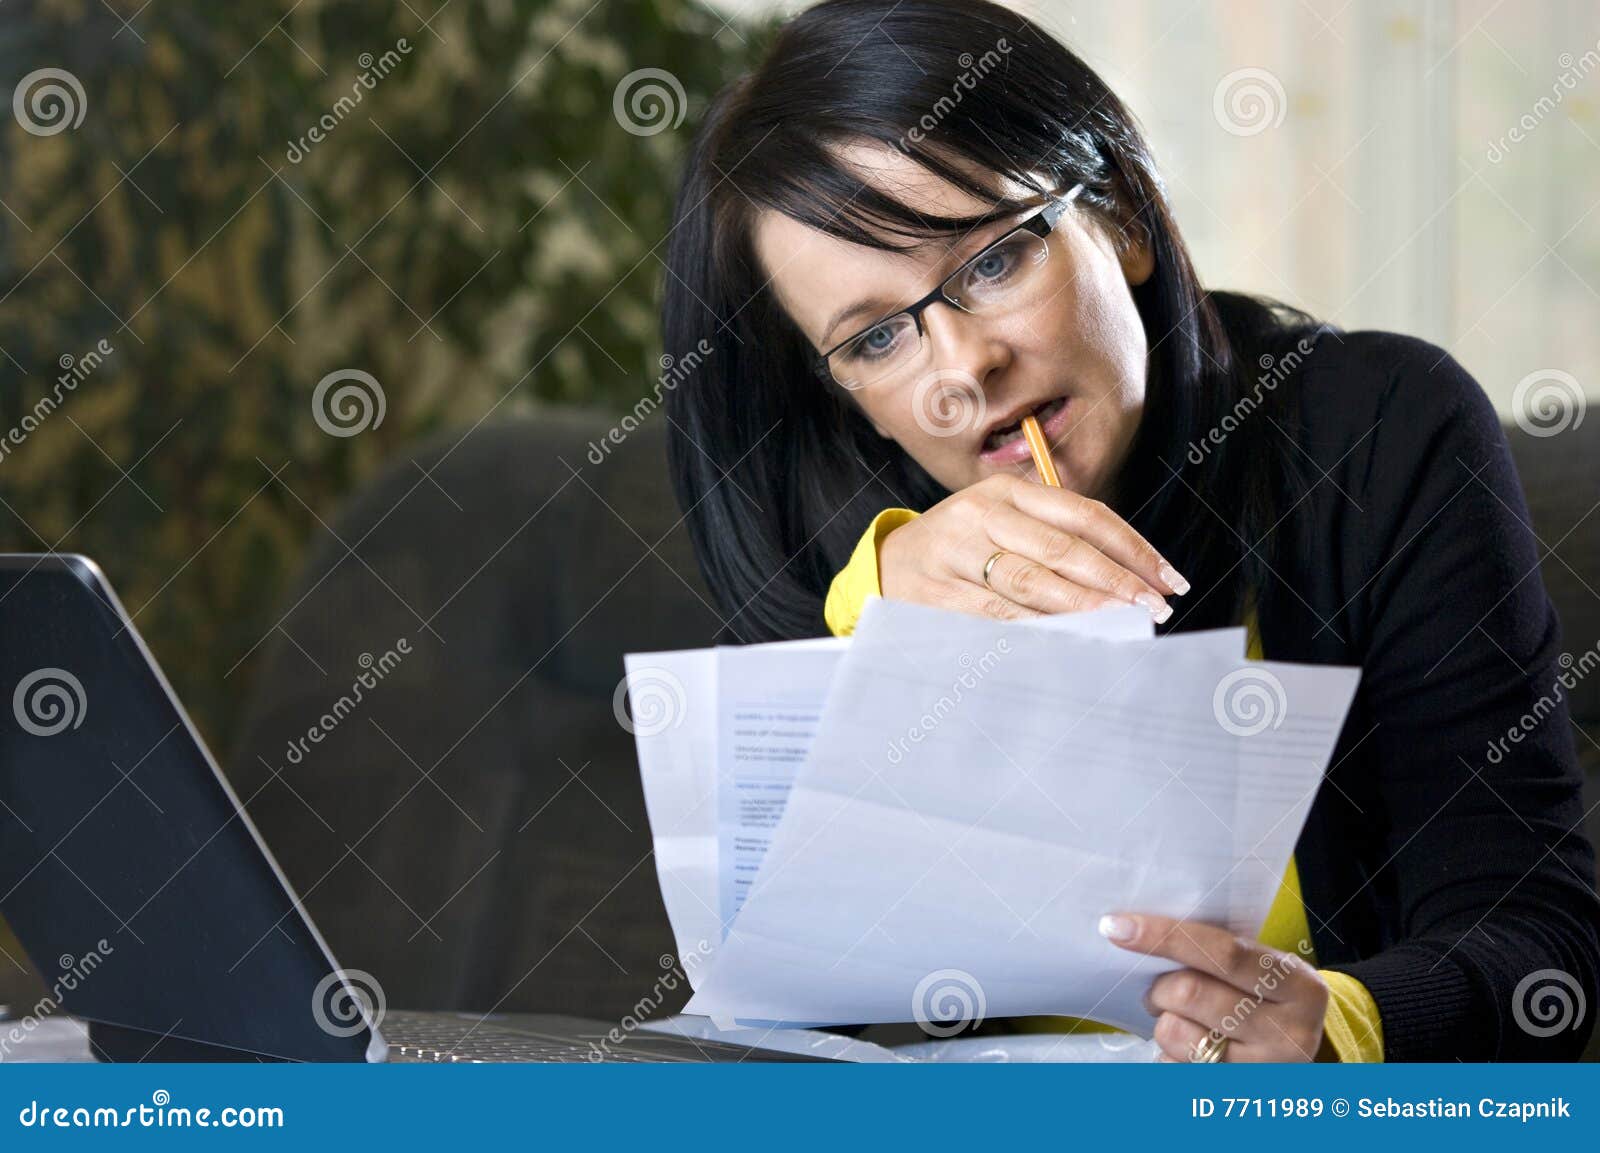 woman looking over paperwork